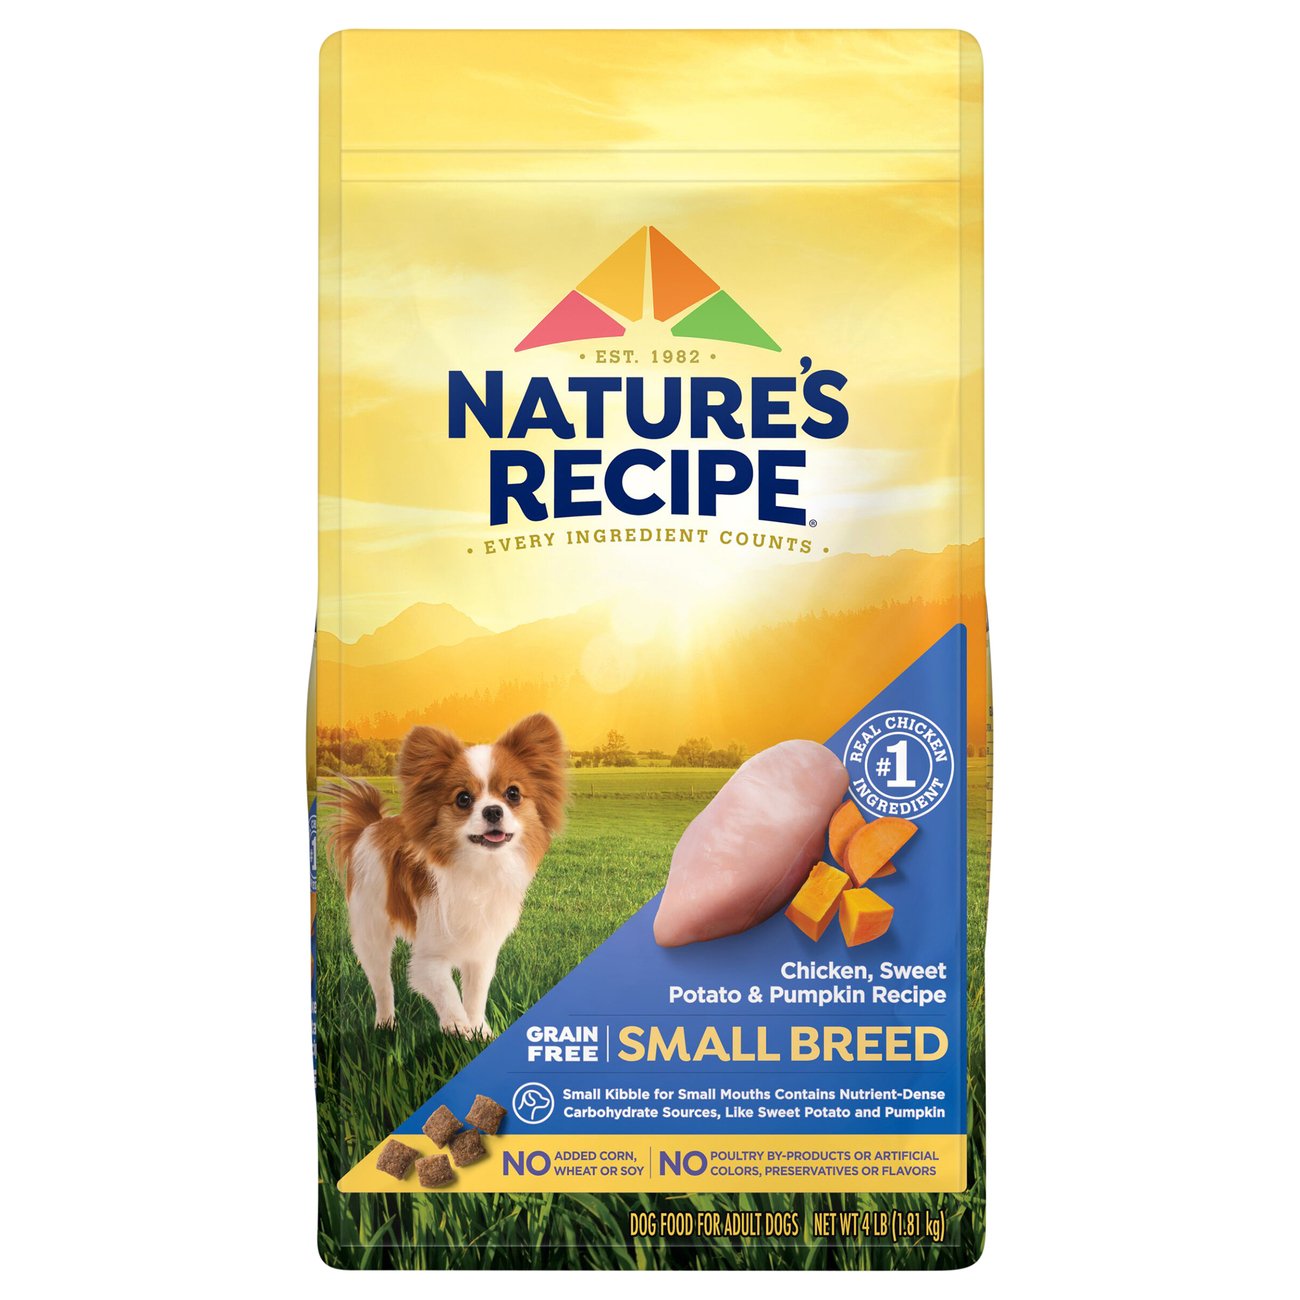 nature's recipe lamb and rice dog food